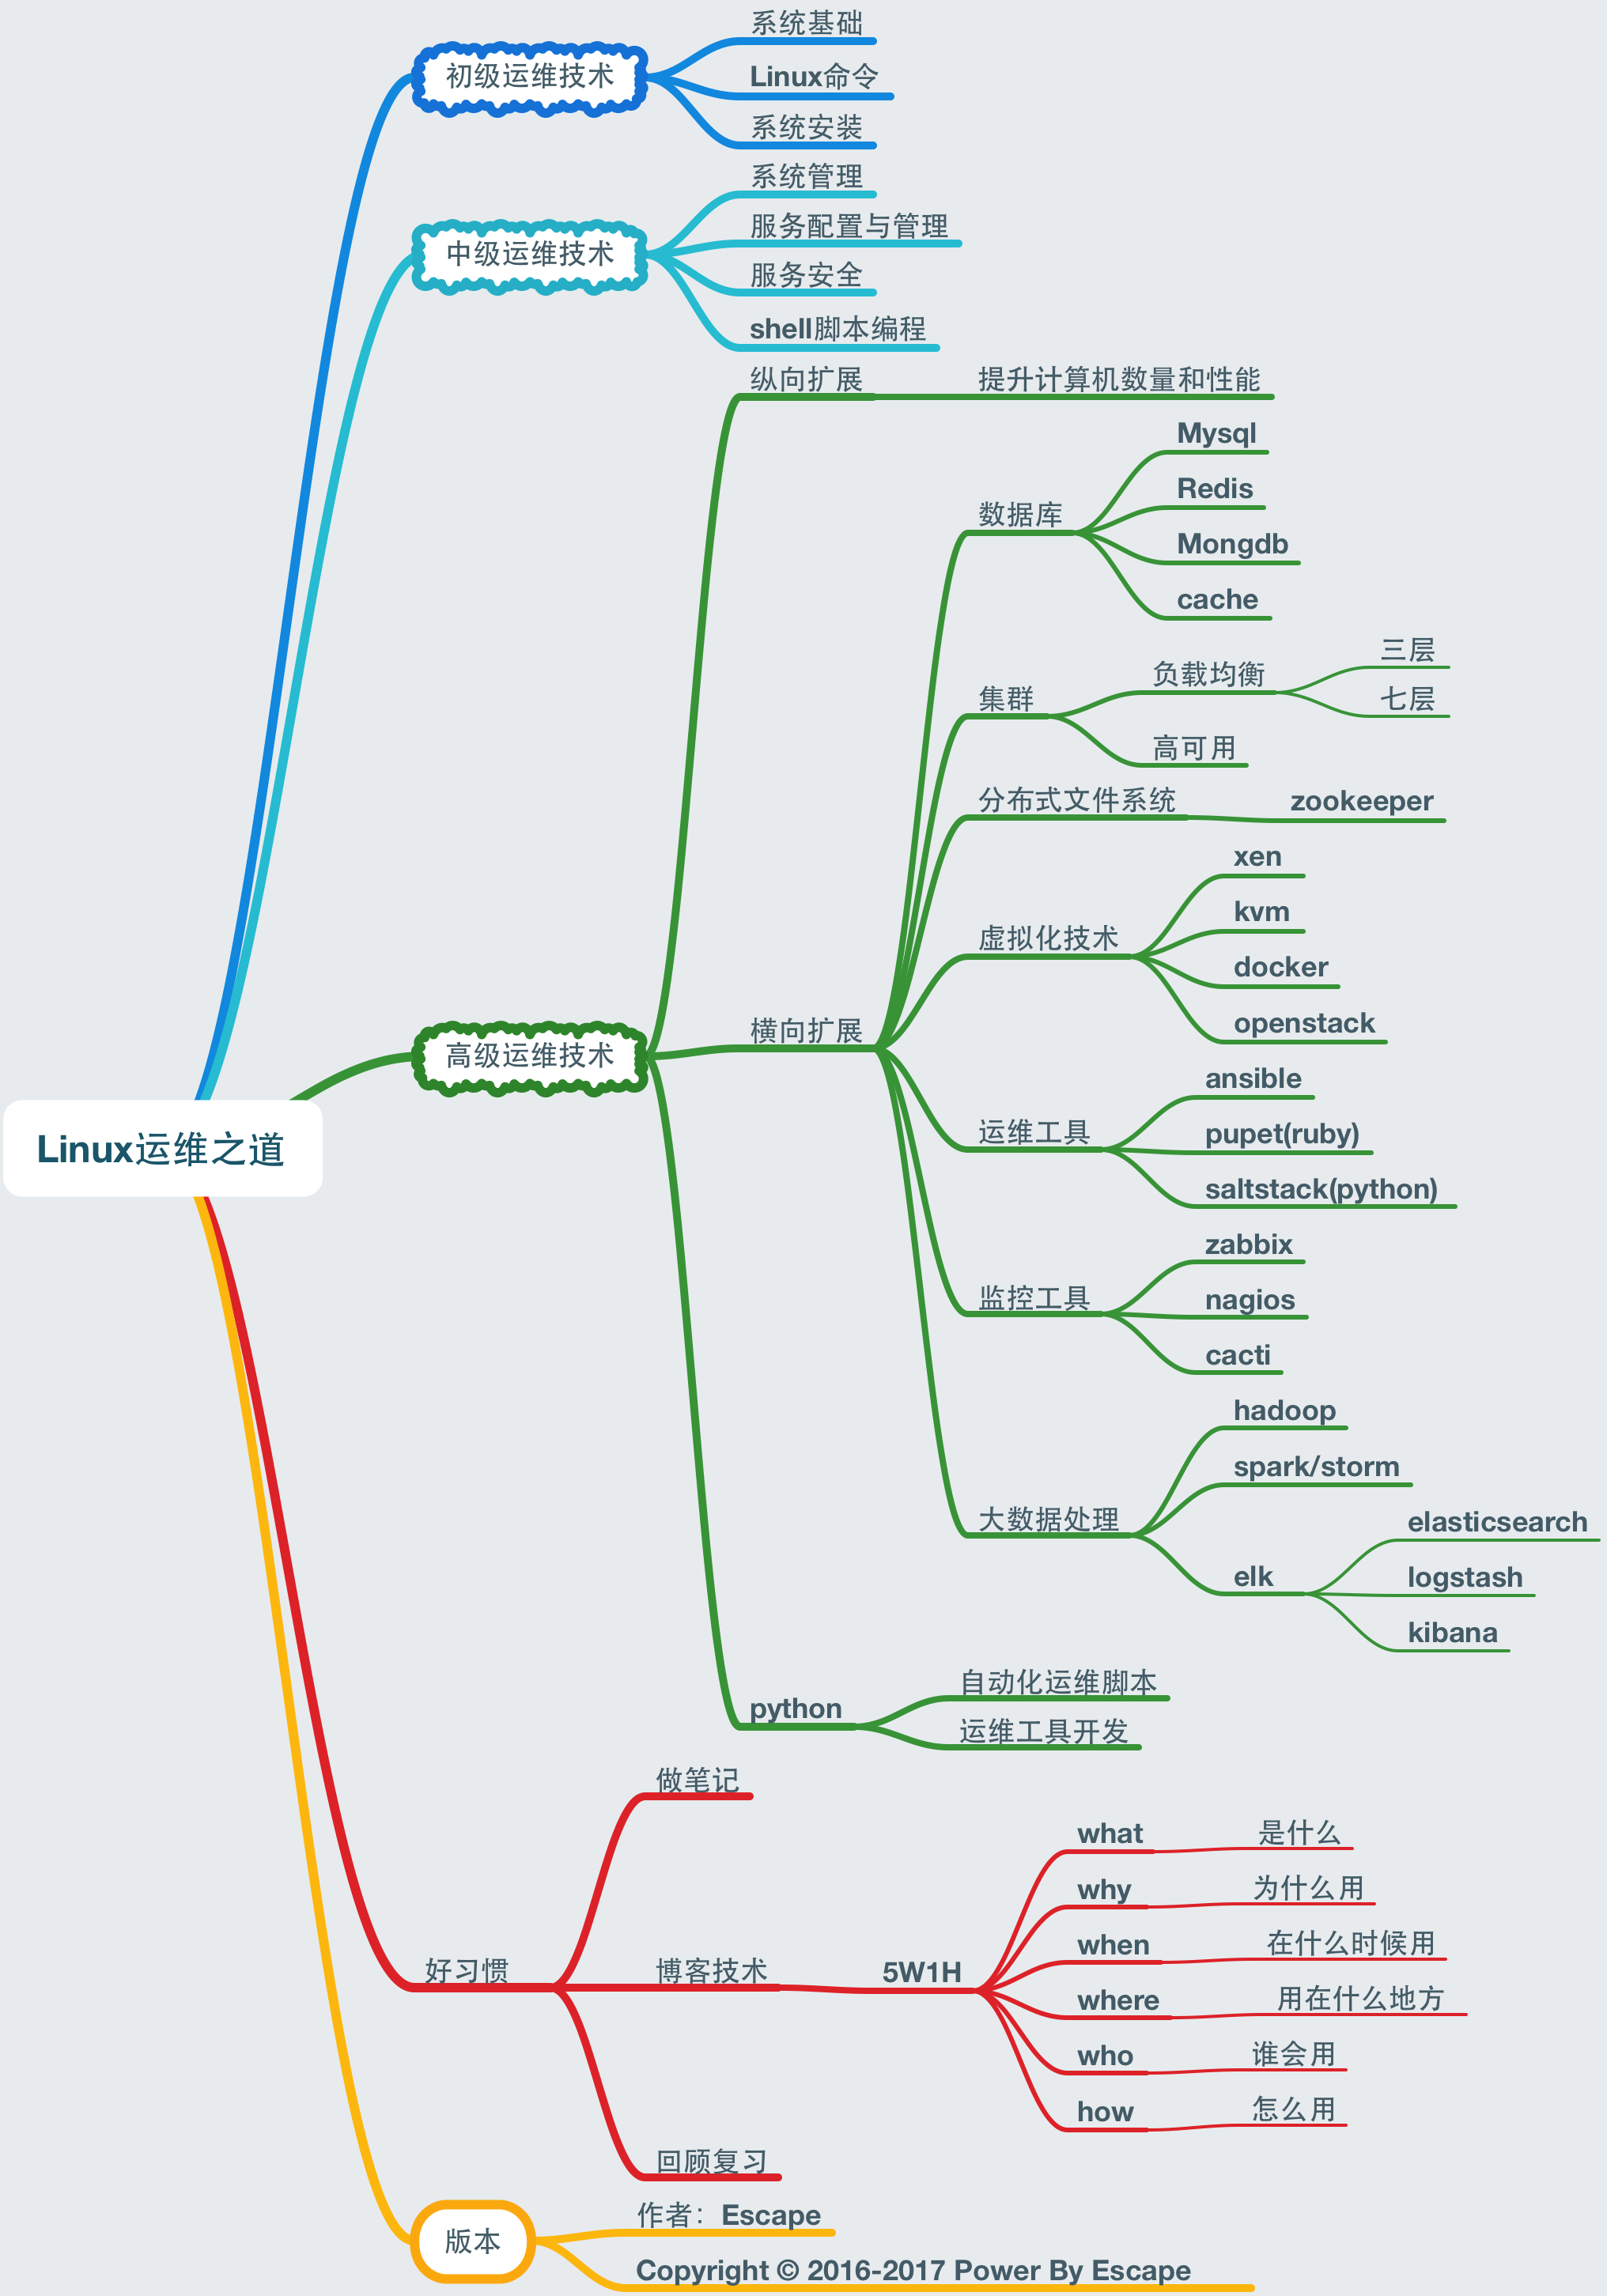 Linux知识结构体系简述 - 知识结构体系图